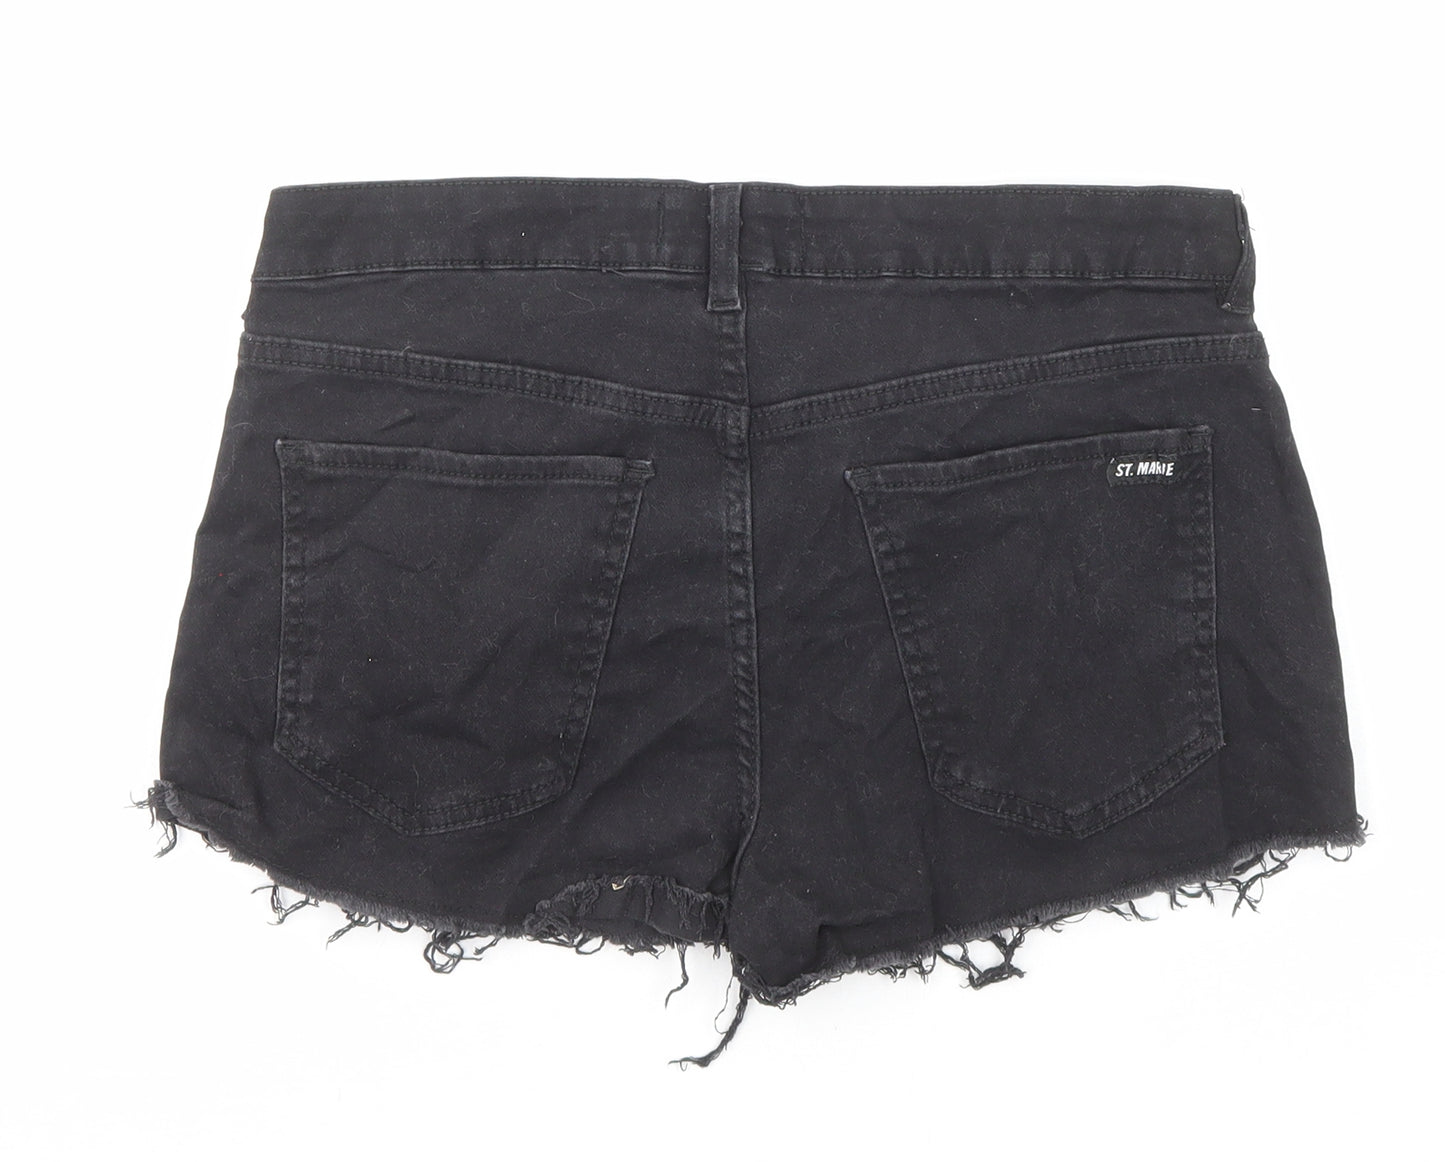 St Marie Jeans Womens Black Cotton Boyfriend Shorts Size 29 in Regular Zip - Raw Hems